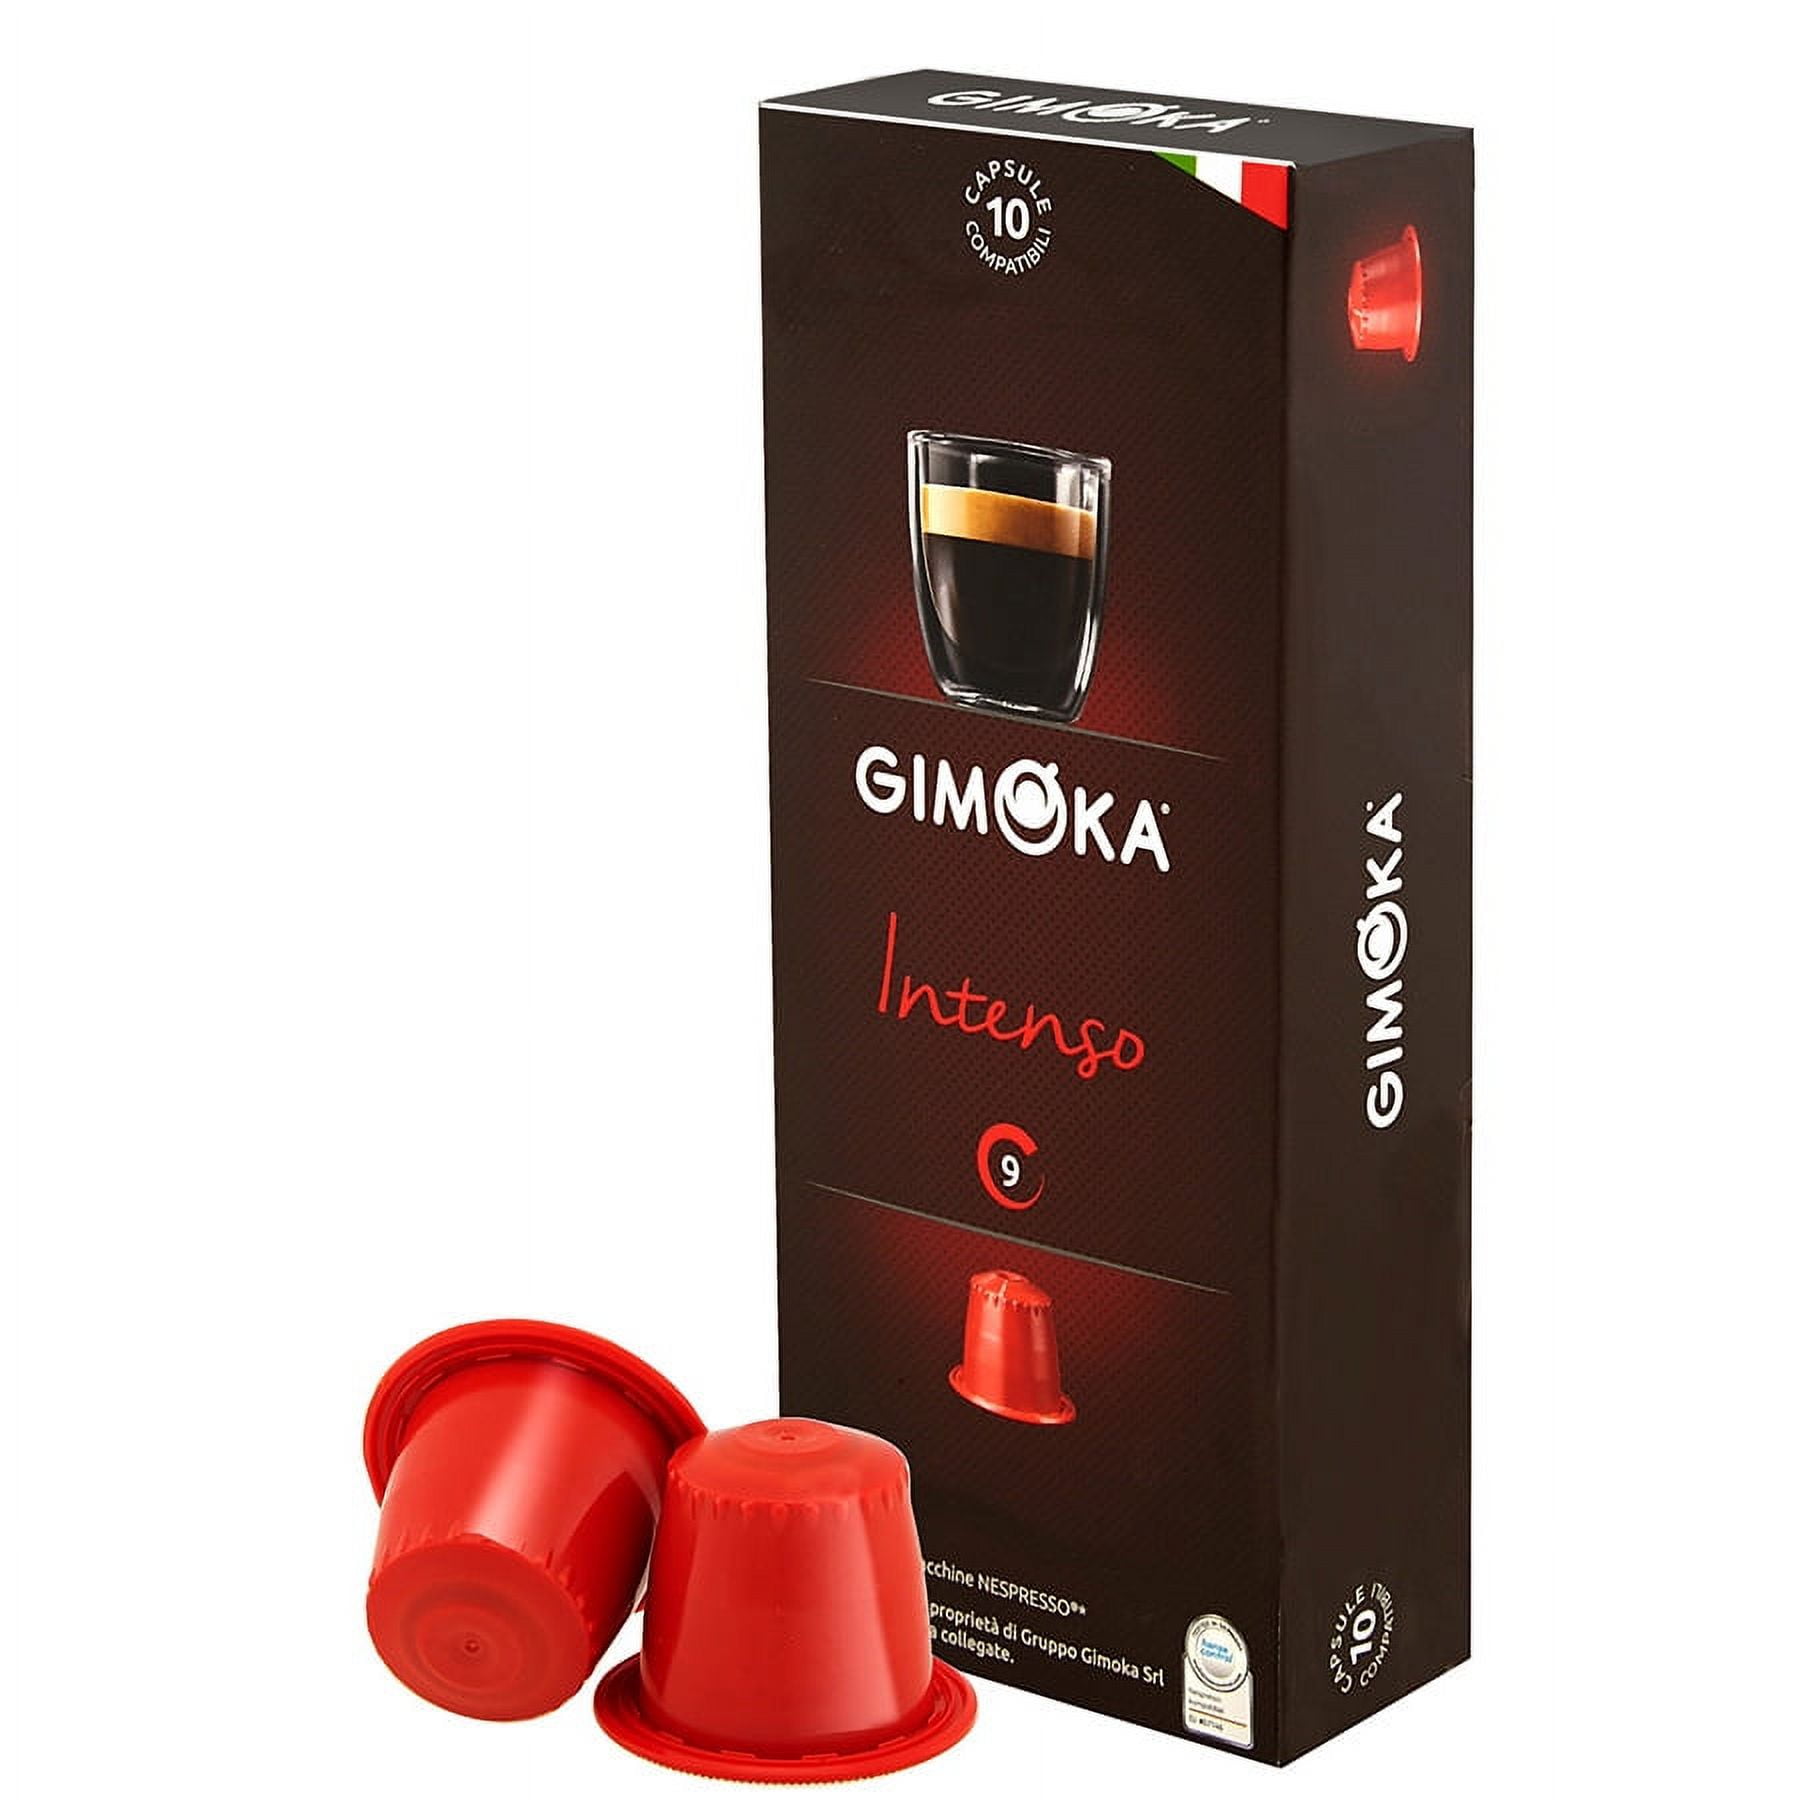 PACK Découverte - Capsule Nespresso Pro Compatible Gimoka - 200 capsules